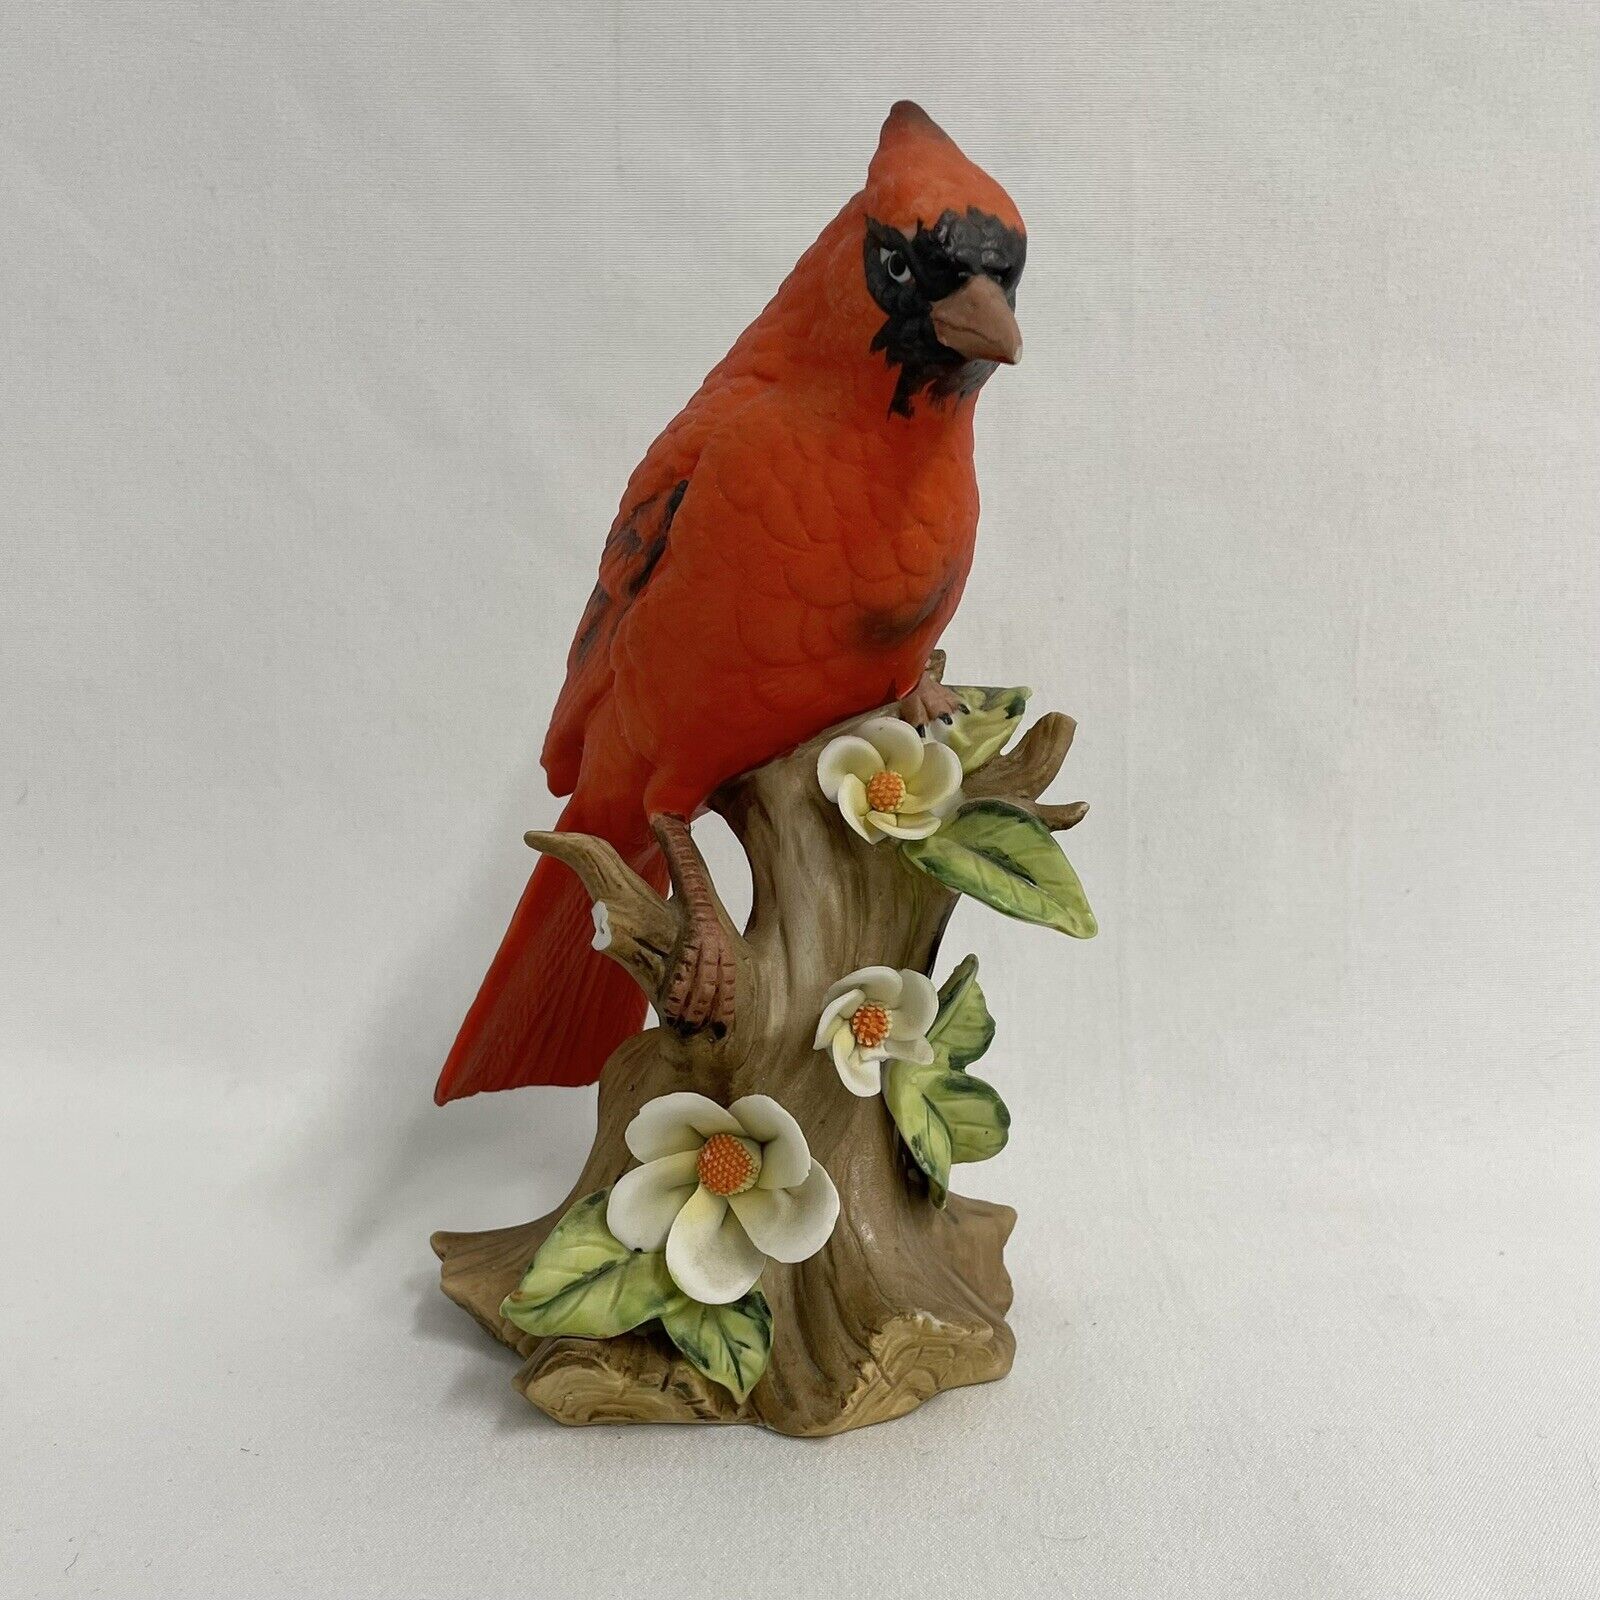 Vintage Red Cardinal Bird Figurine With White Flowers